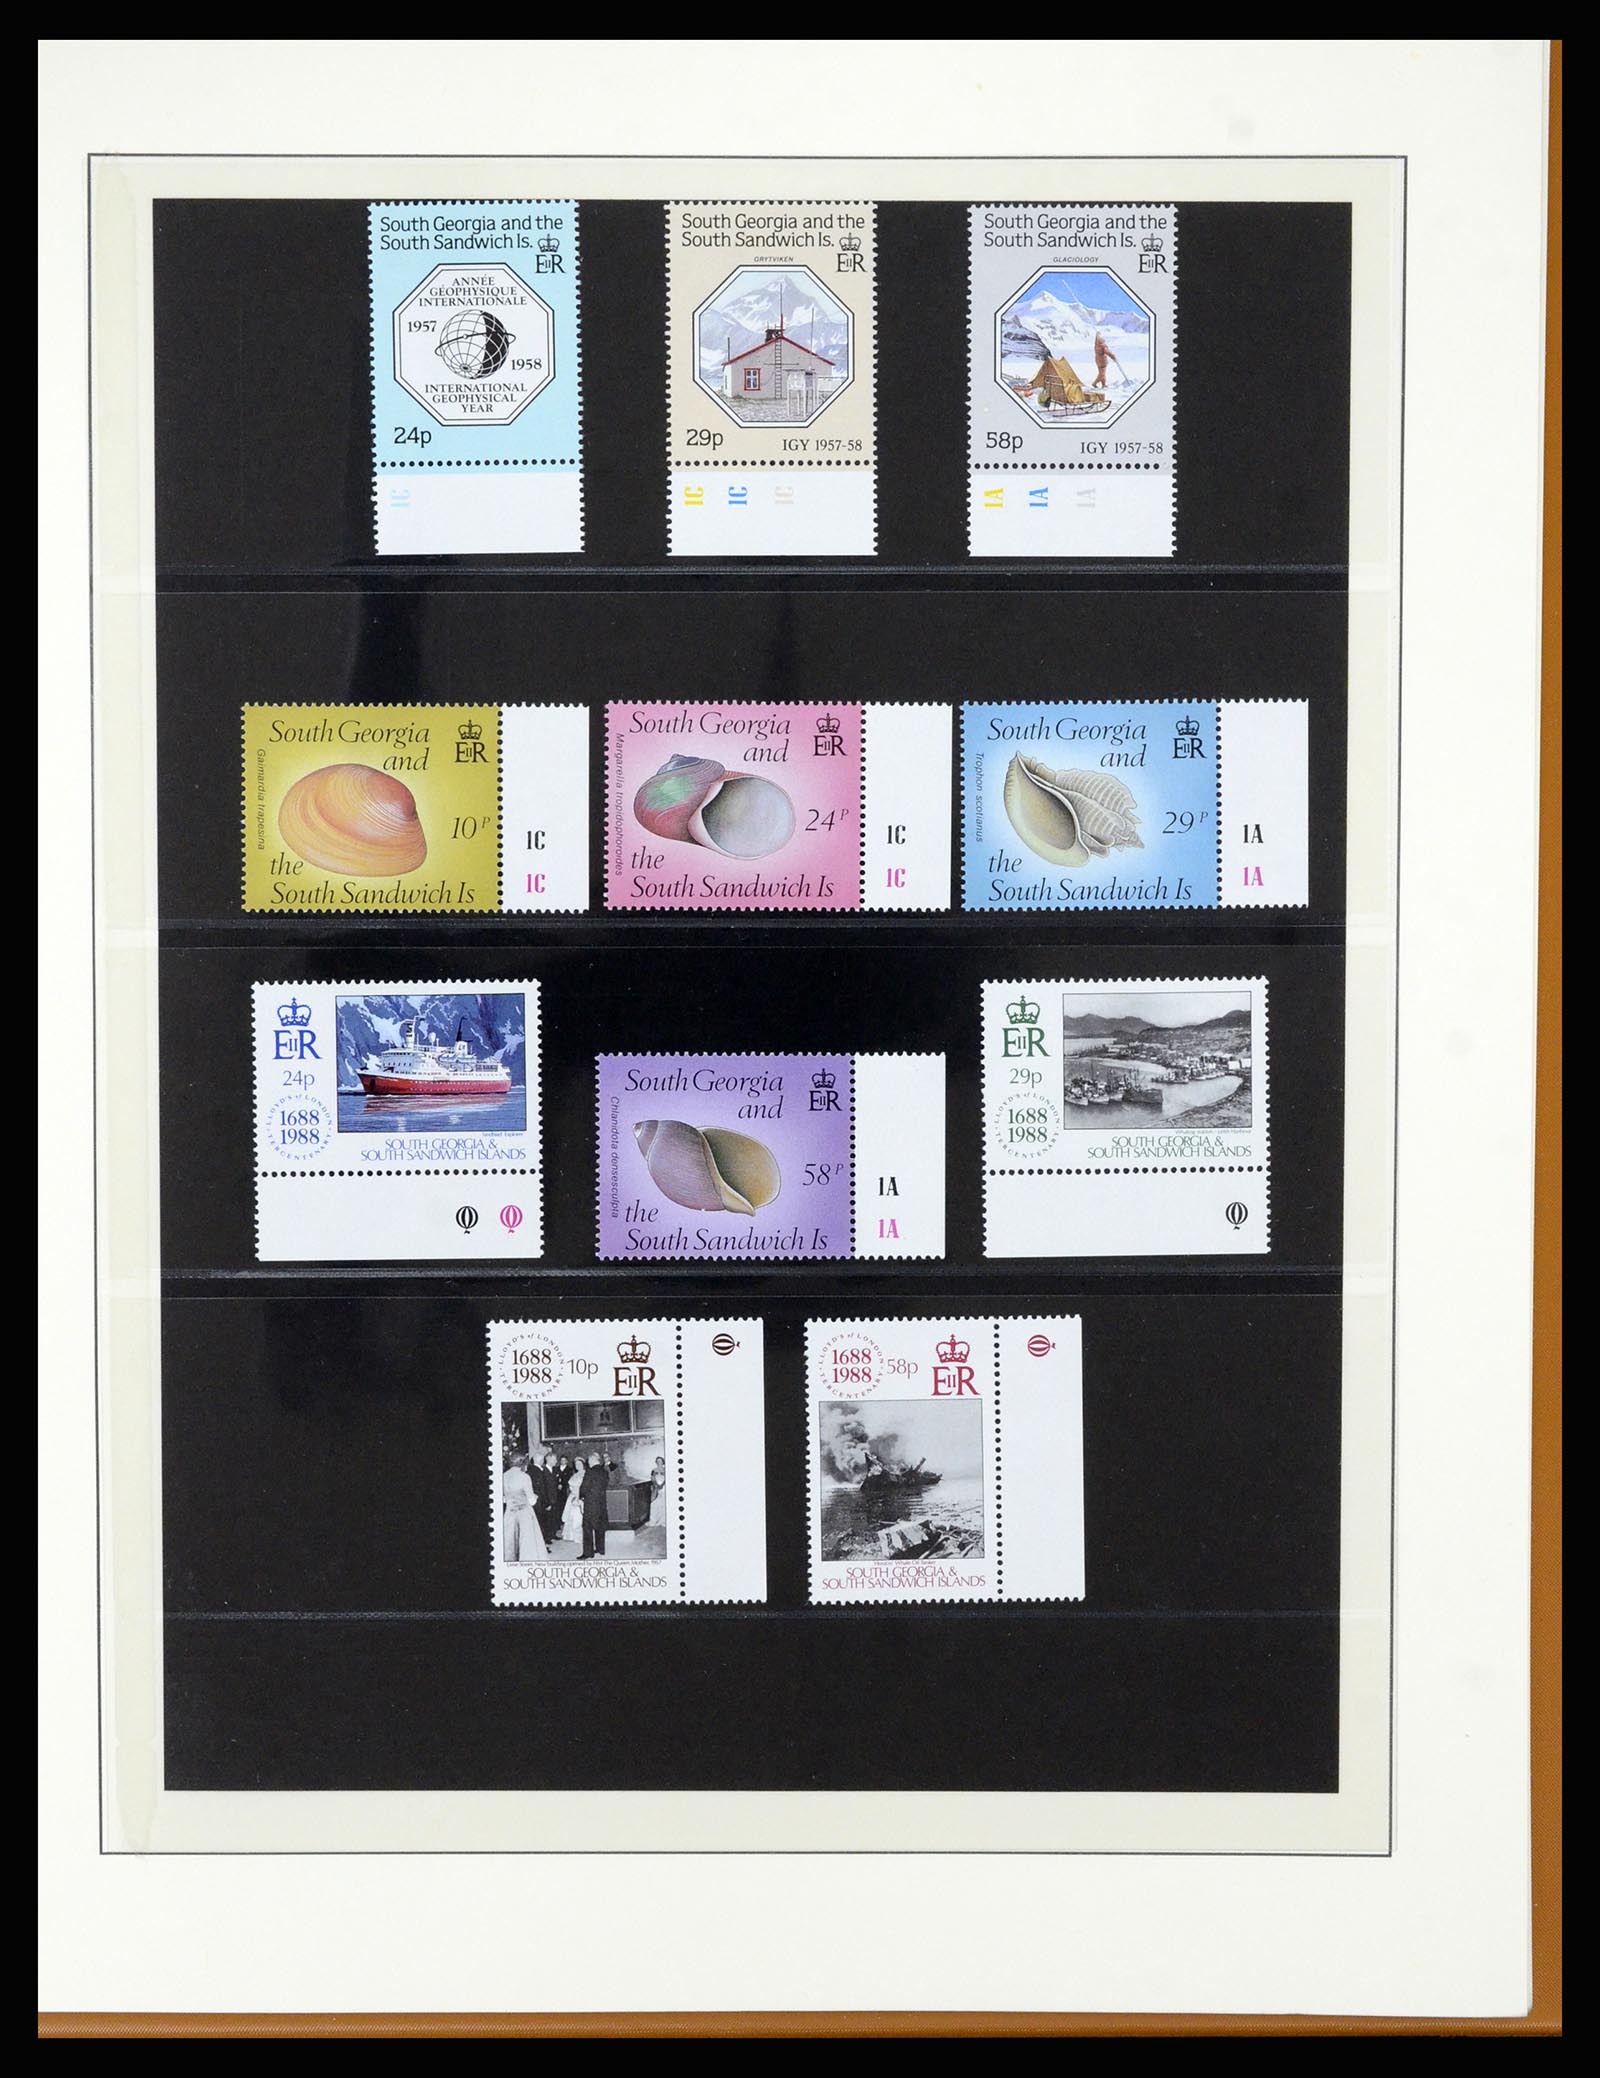 36929 032 - Stamp collection 36929 Falkland Islands dependencies 1944-1997.